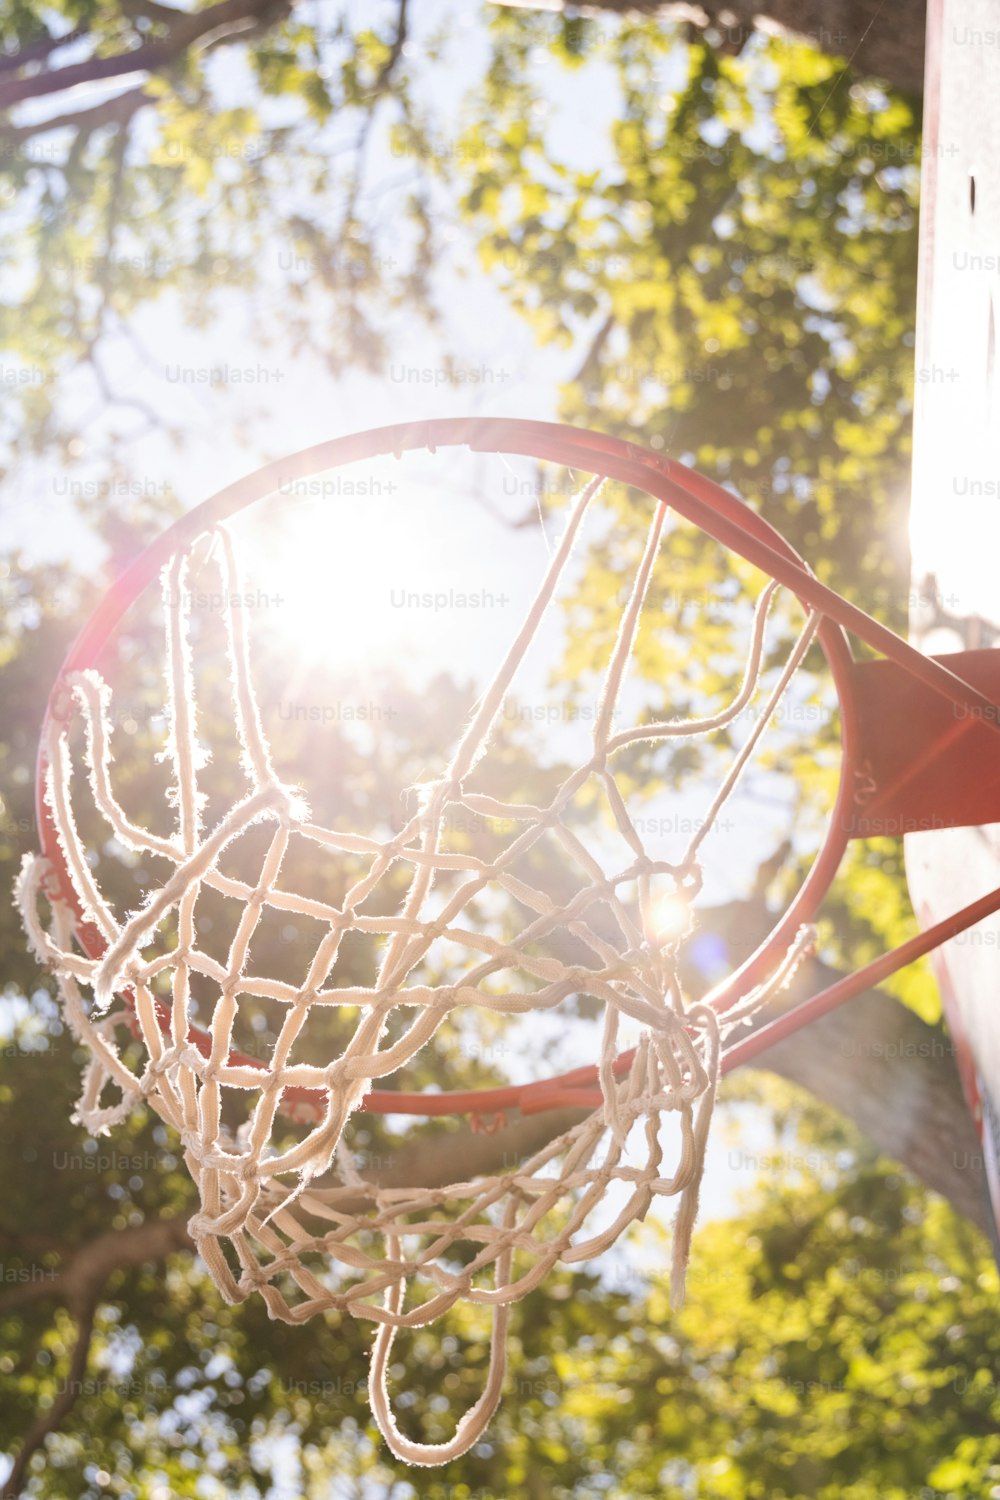 a close up of a basketball going through a hoop